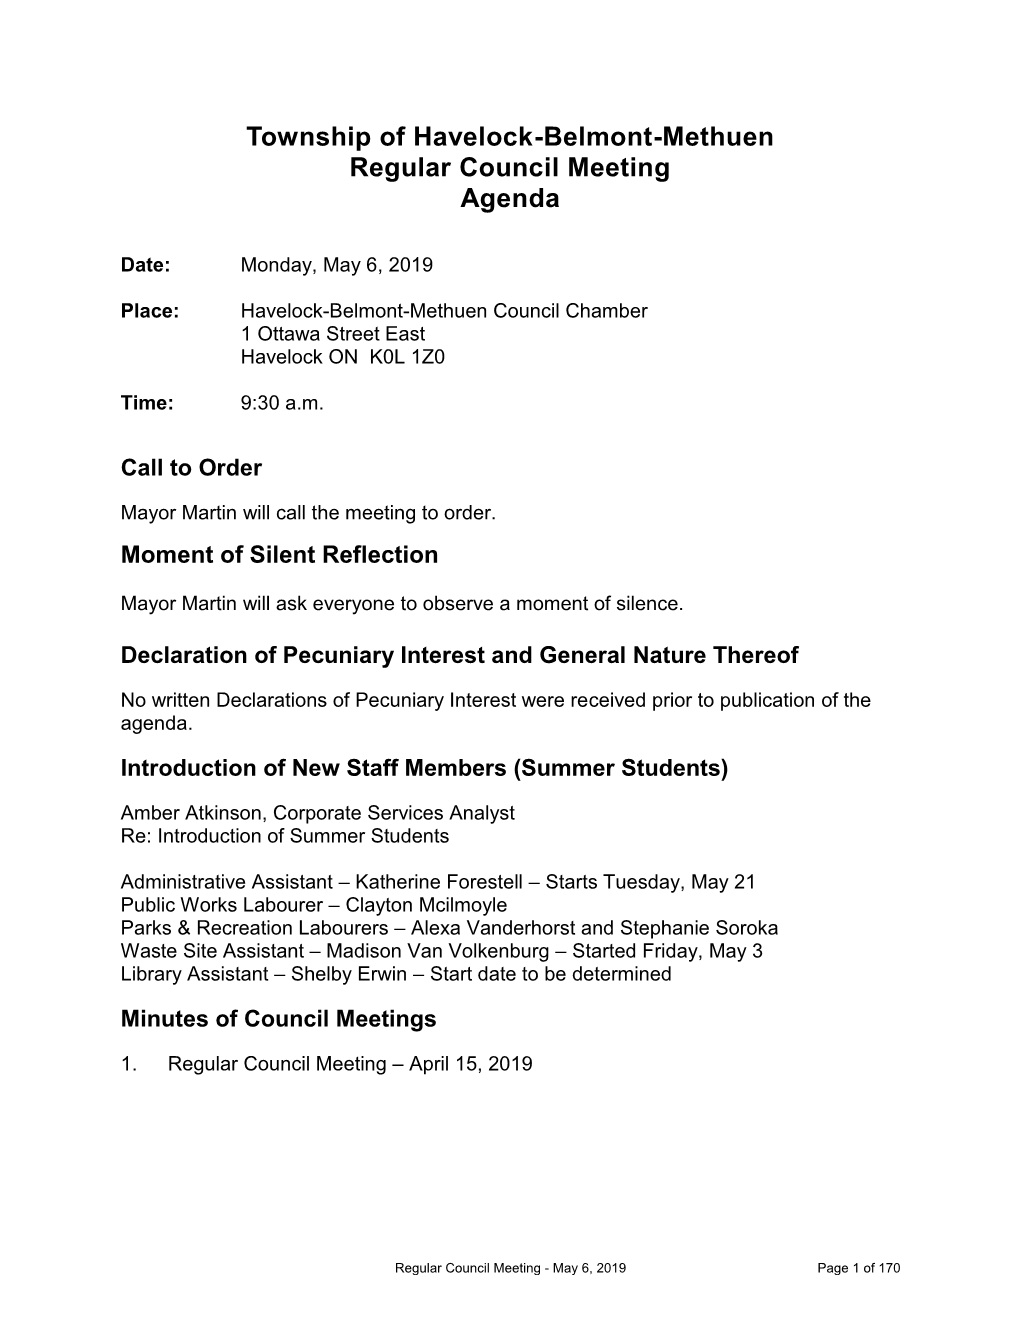 Township of Havelock-Belmont-Methuen Regular Council Meeting Agenda